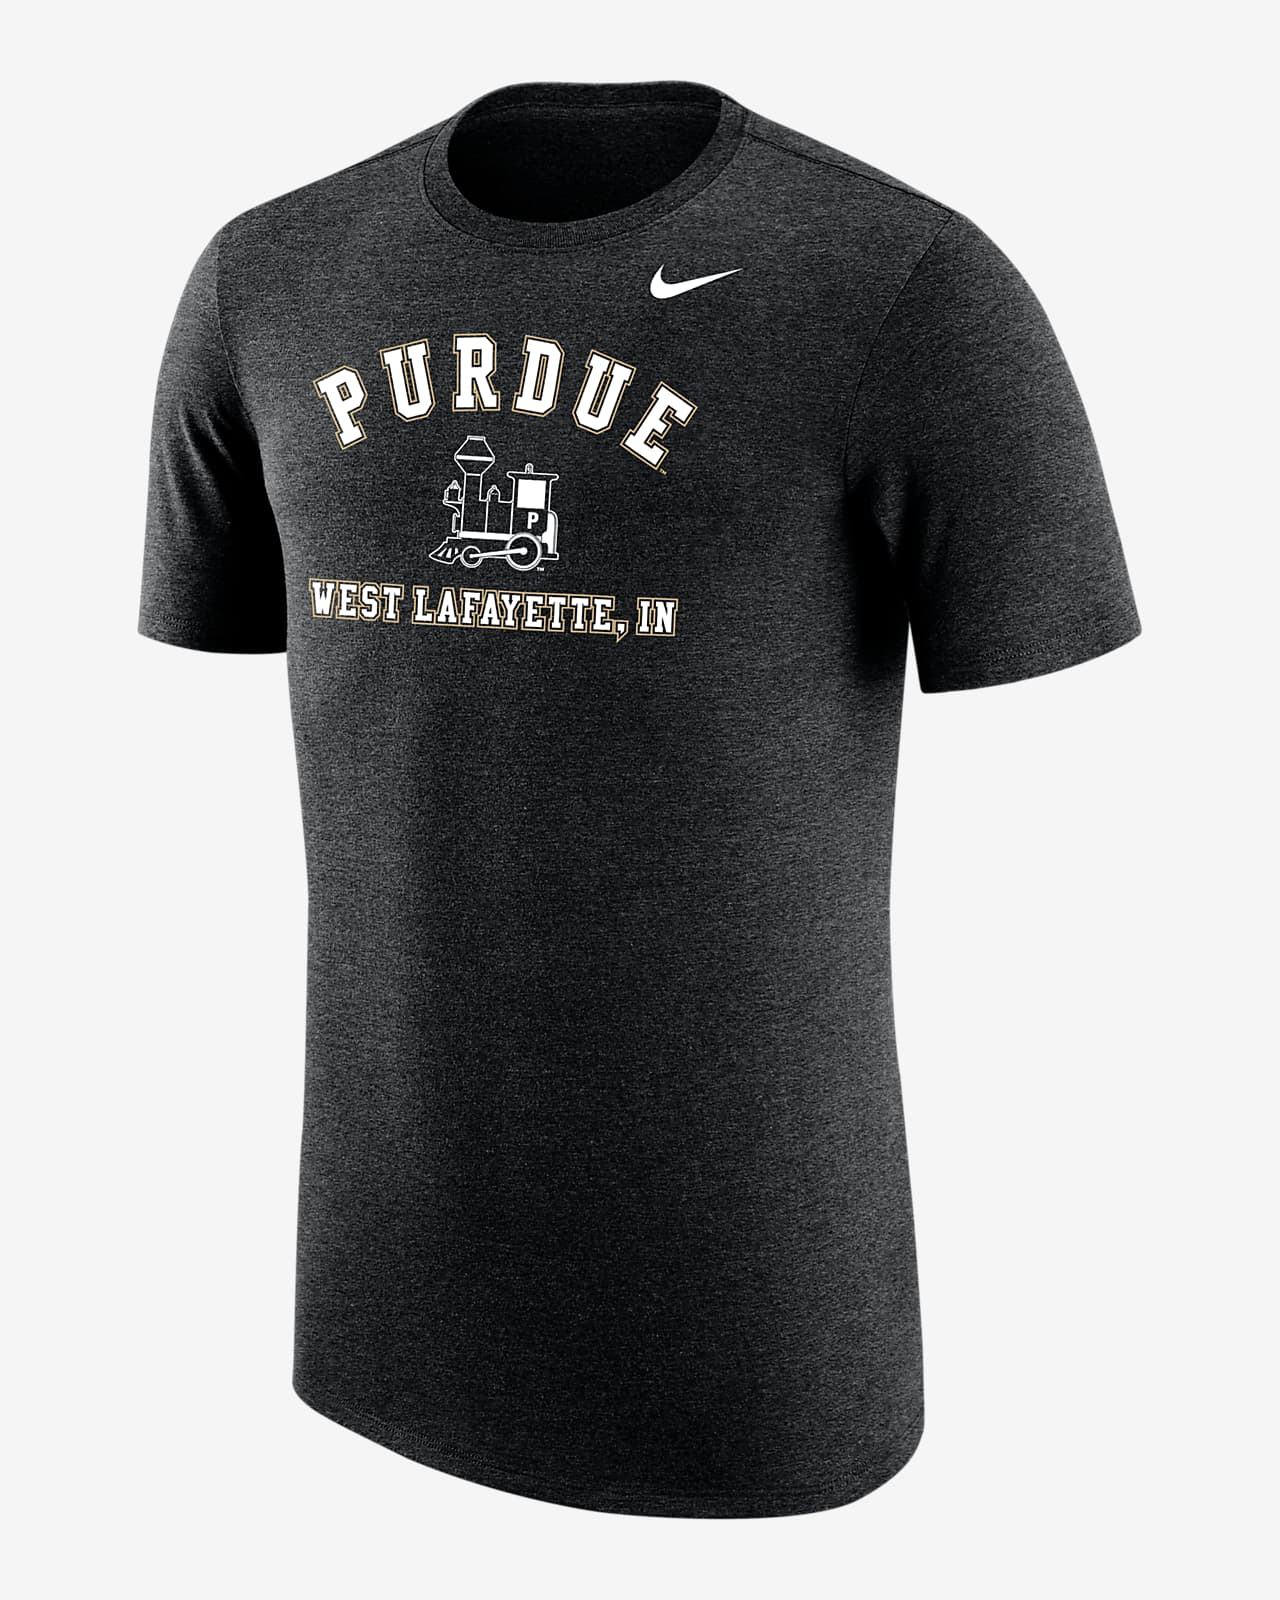 Purdue Men's Nike College T-Shirt